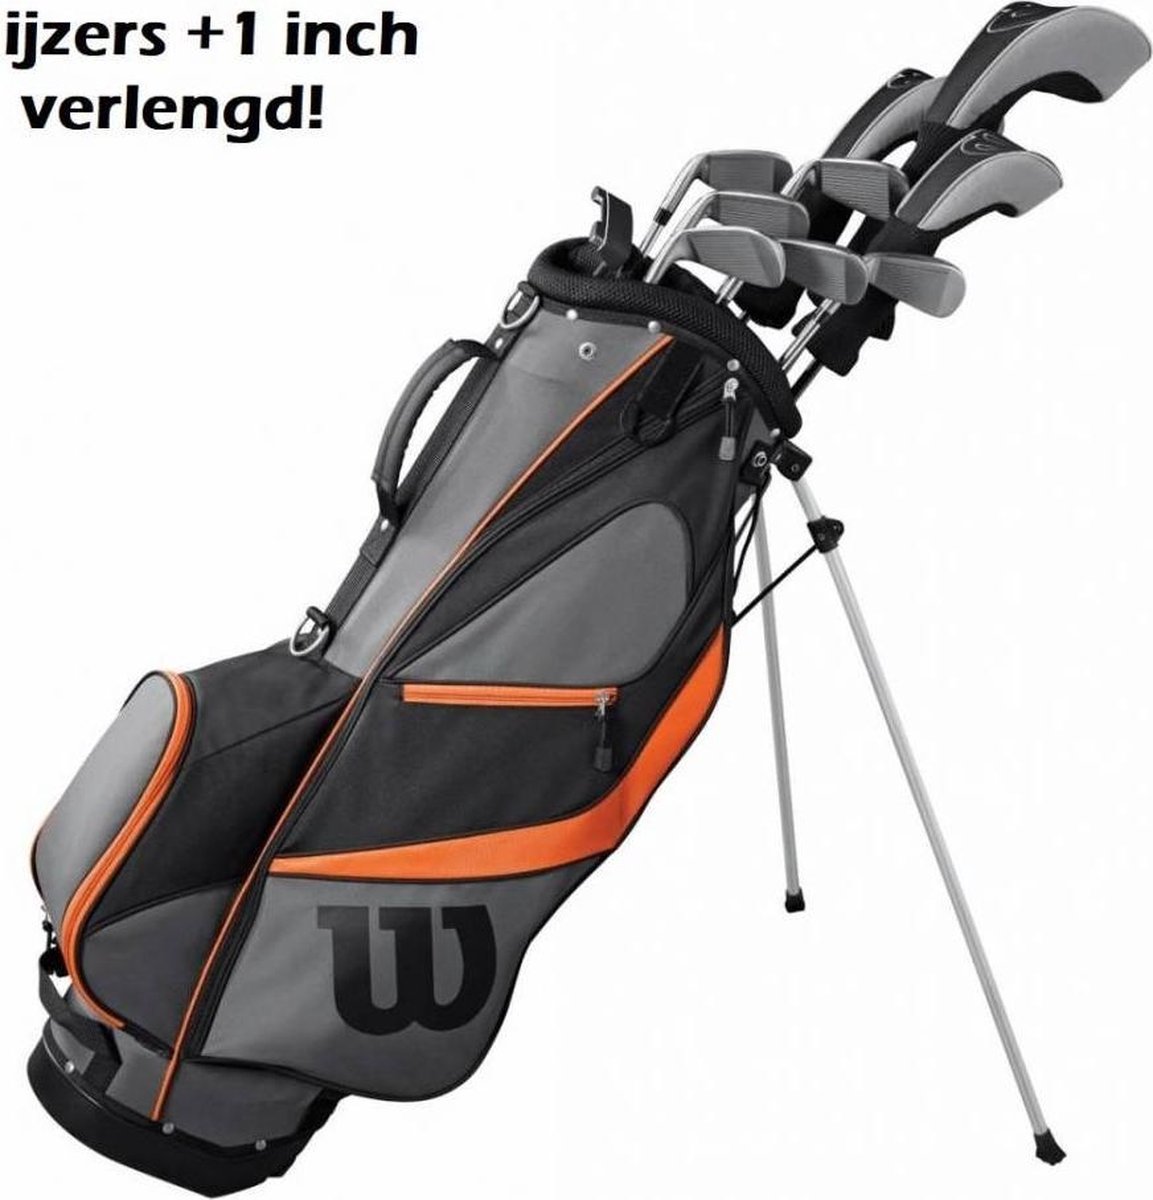 verkoper verbergen lager X31 Complete 14-delige Golfset +1 Inch Verlengd 2019 (steel shaft) | bol.com